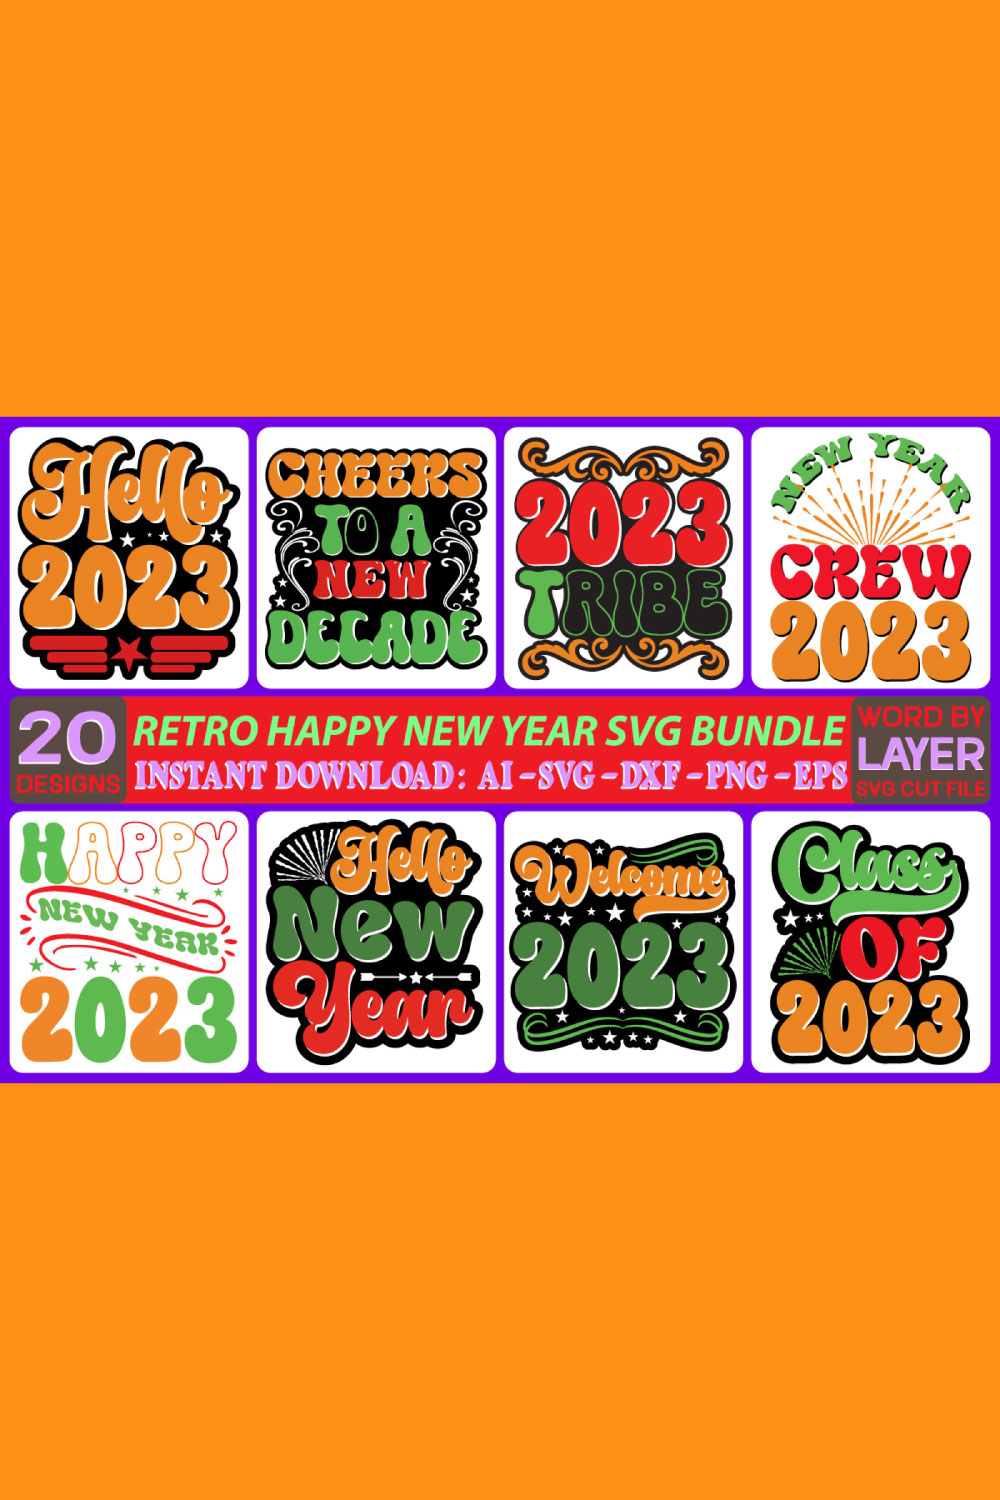 Happy New Year Retro SVG Design Bundle pinterest image.